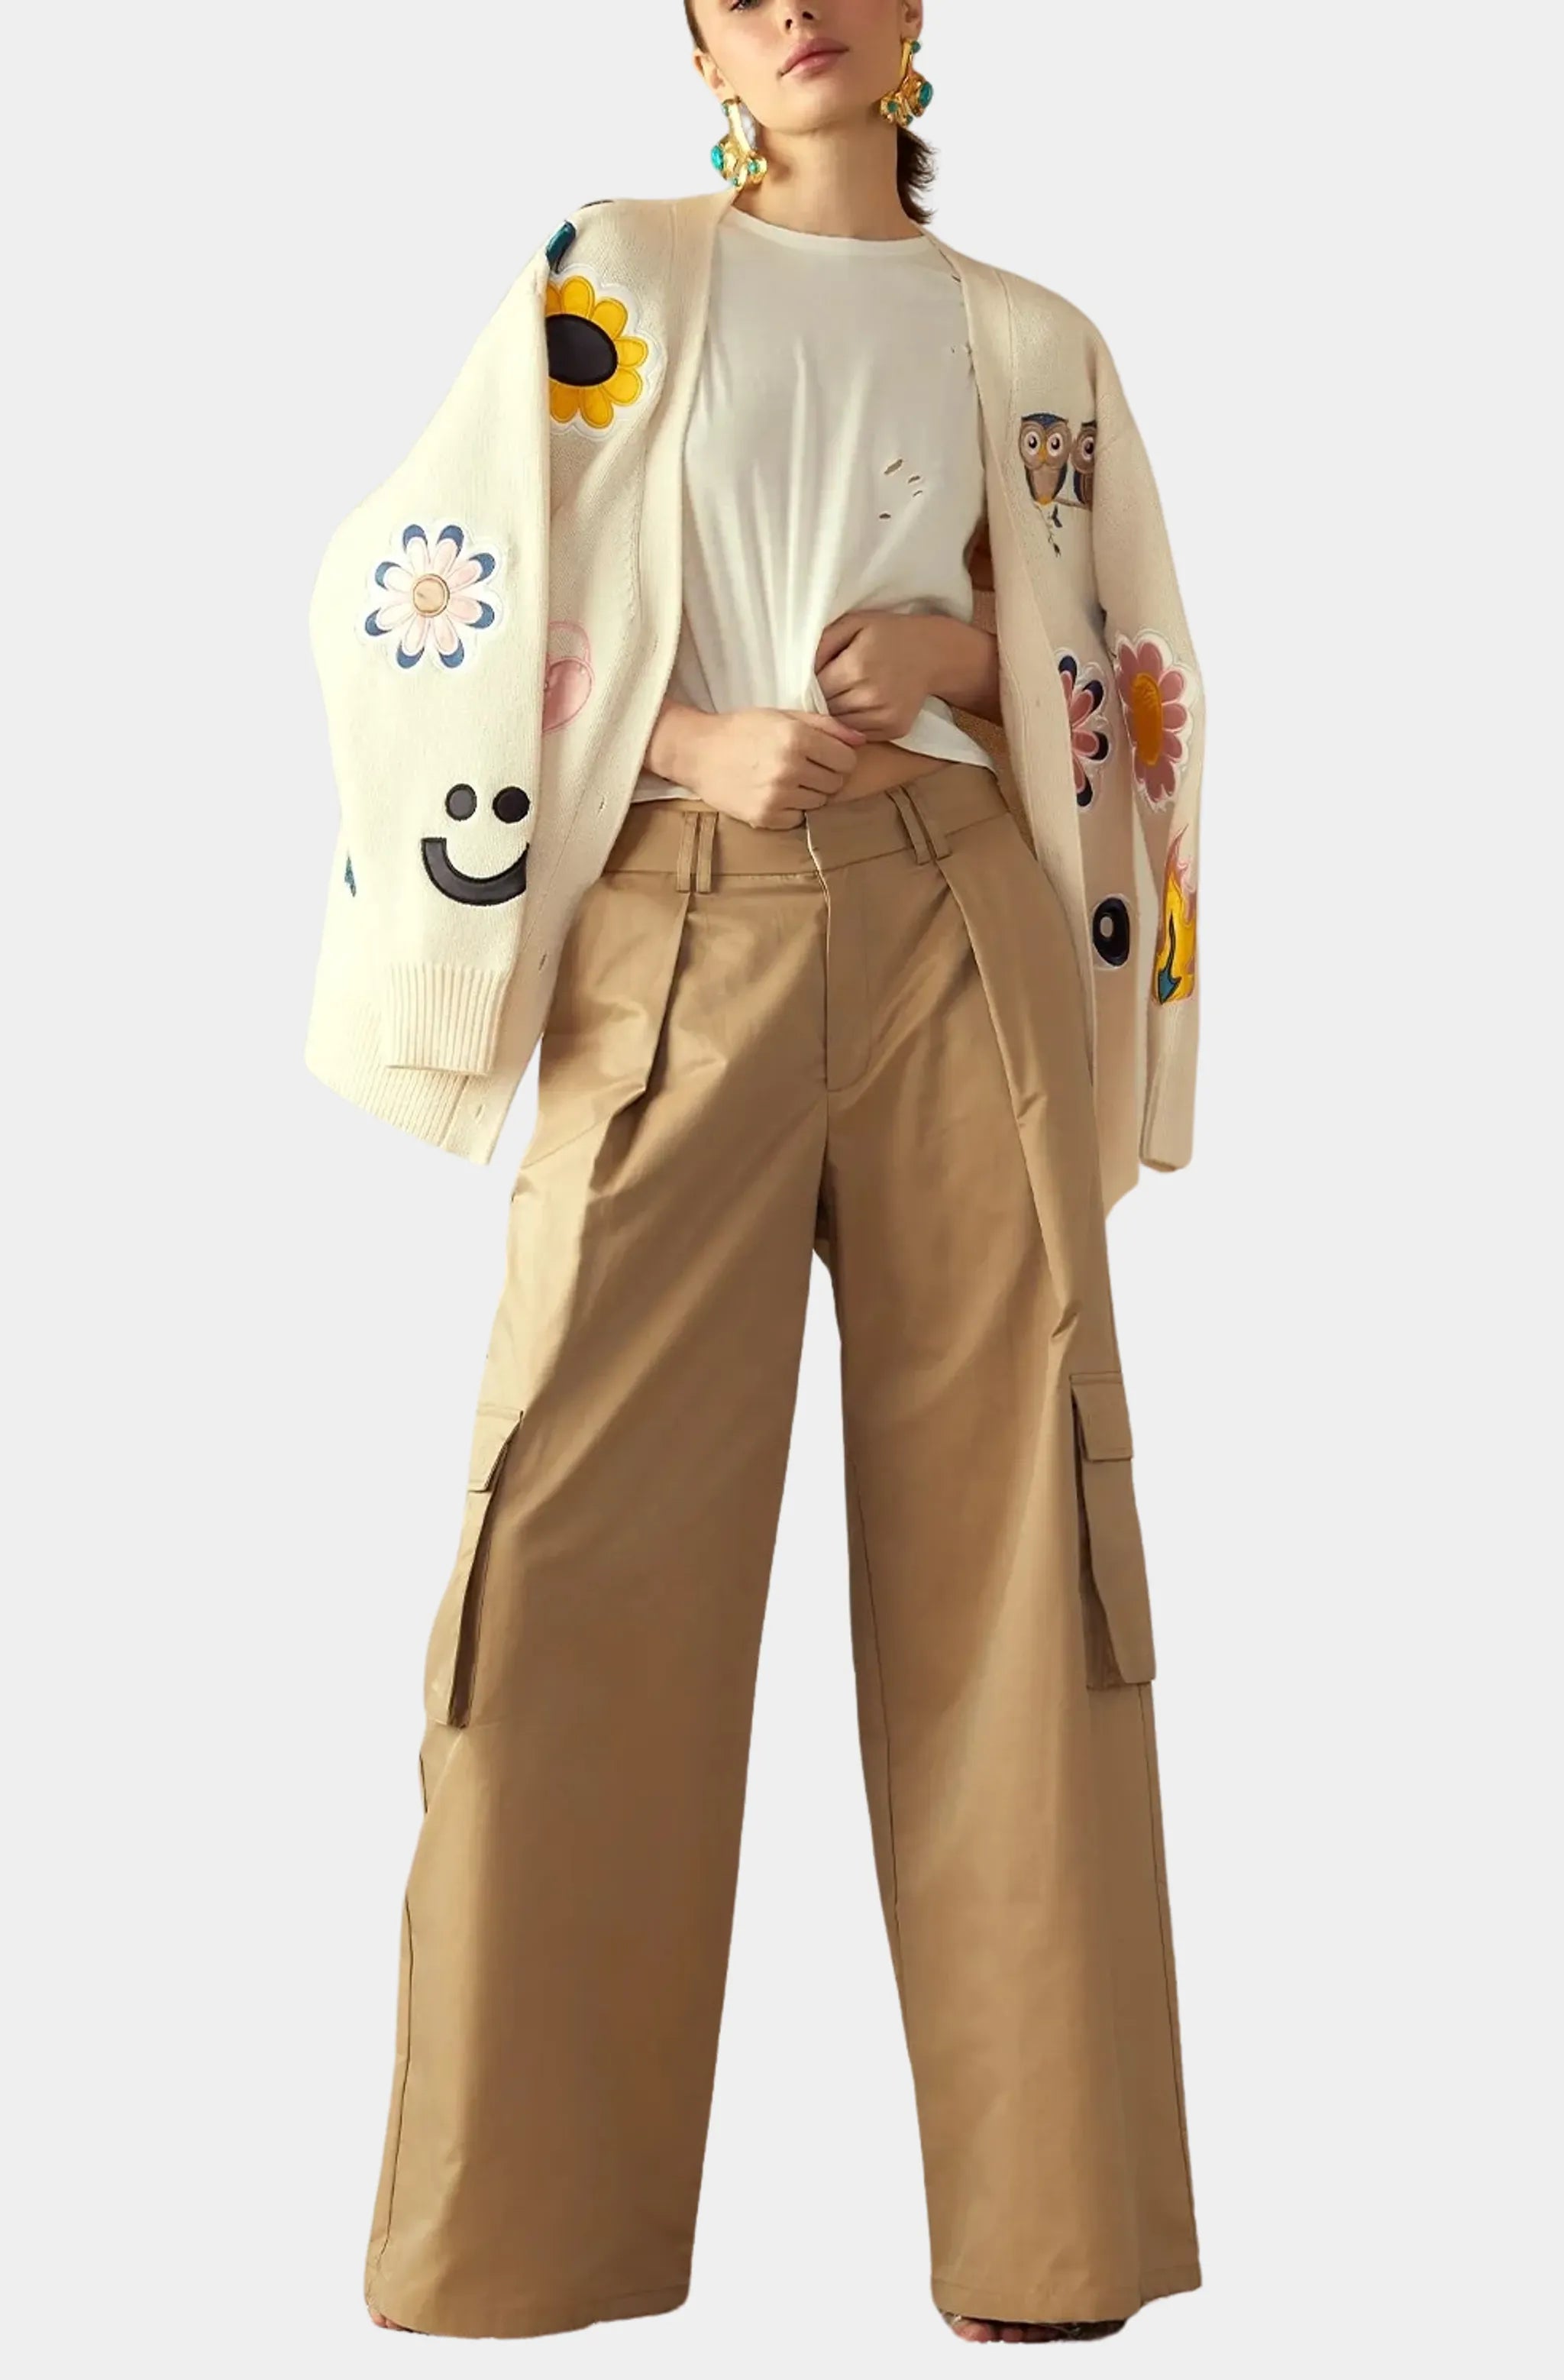 J & Ce Women's Gauze Cotton Beach Pants with Pockets (White, XL